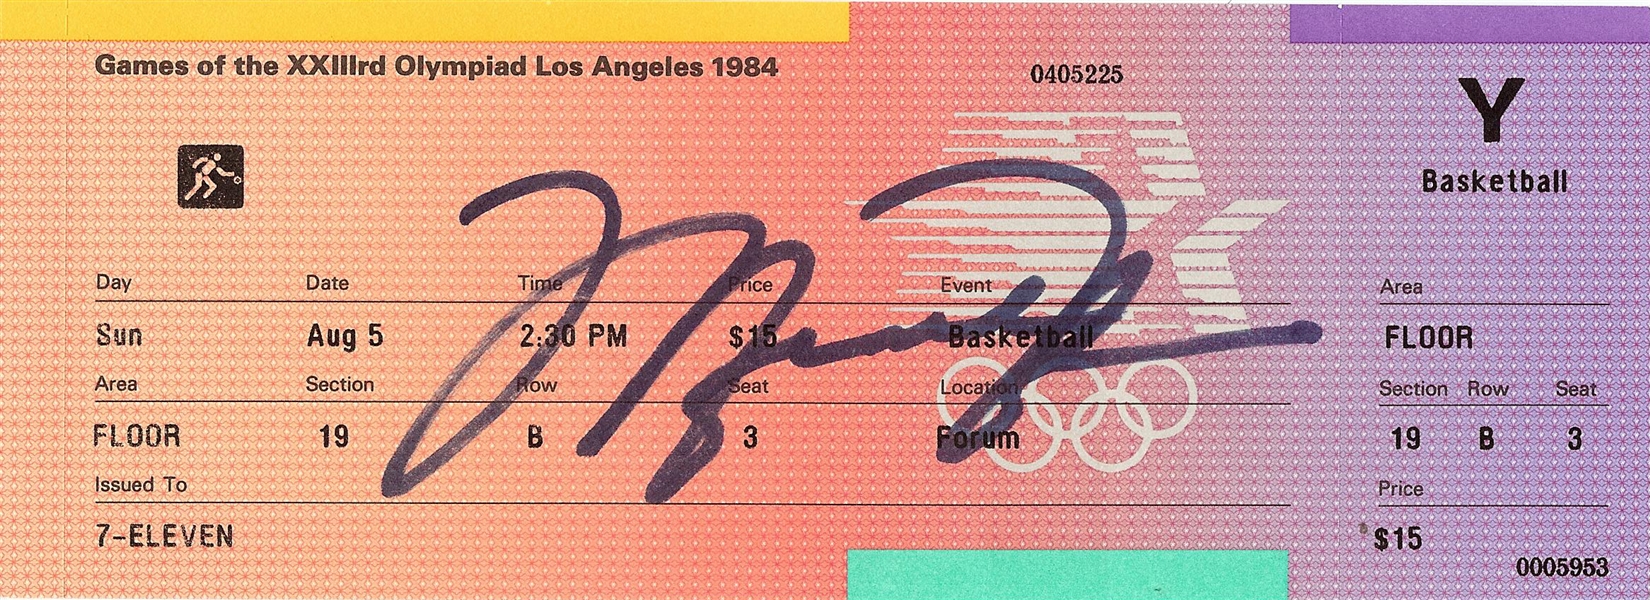 Michael Jordan Signed 1984 Olympics Basketball Ticket (JSA)